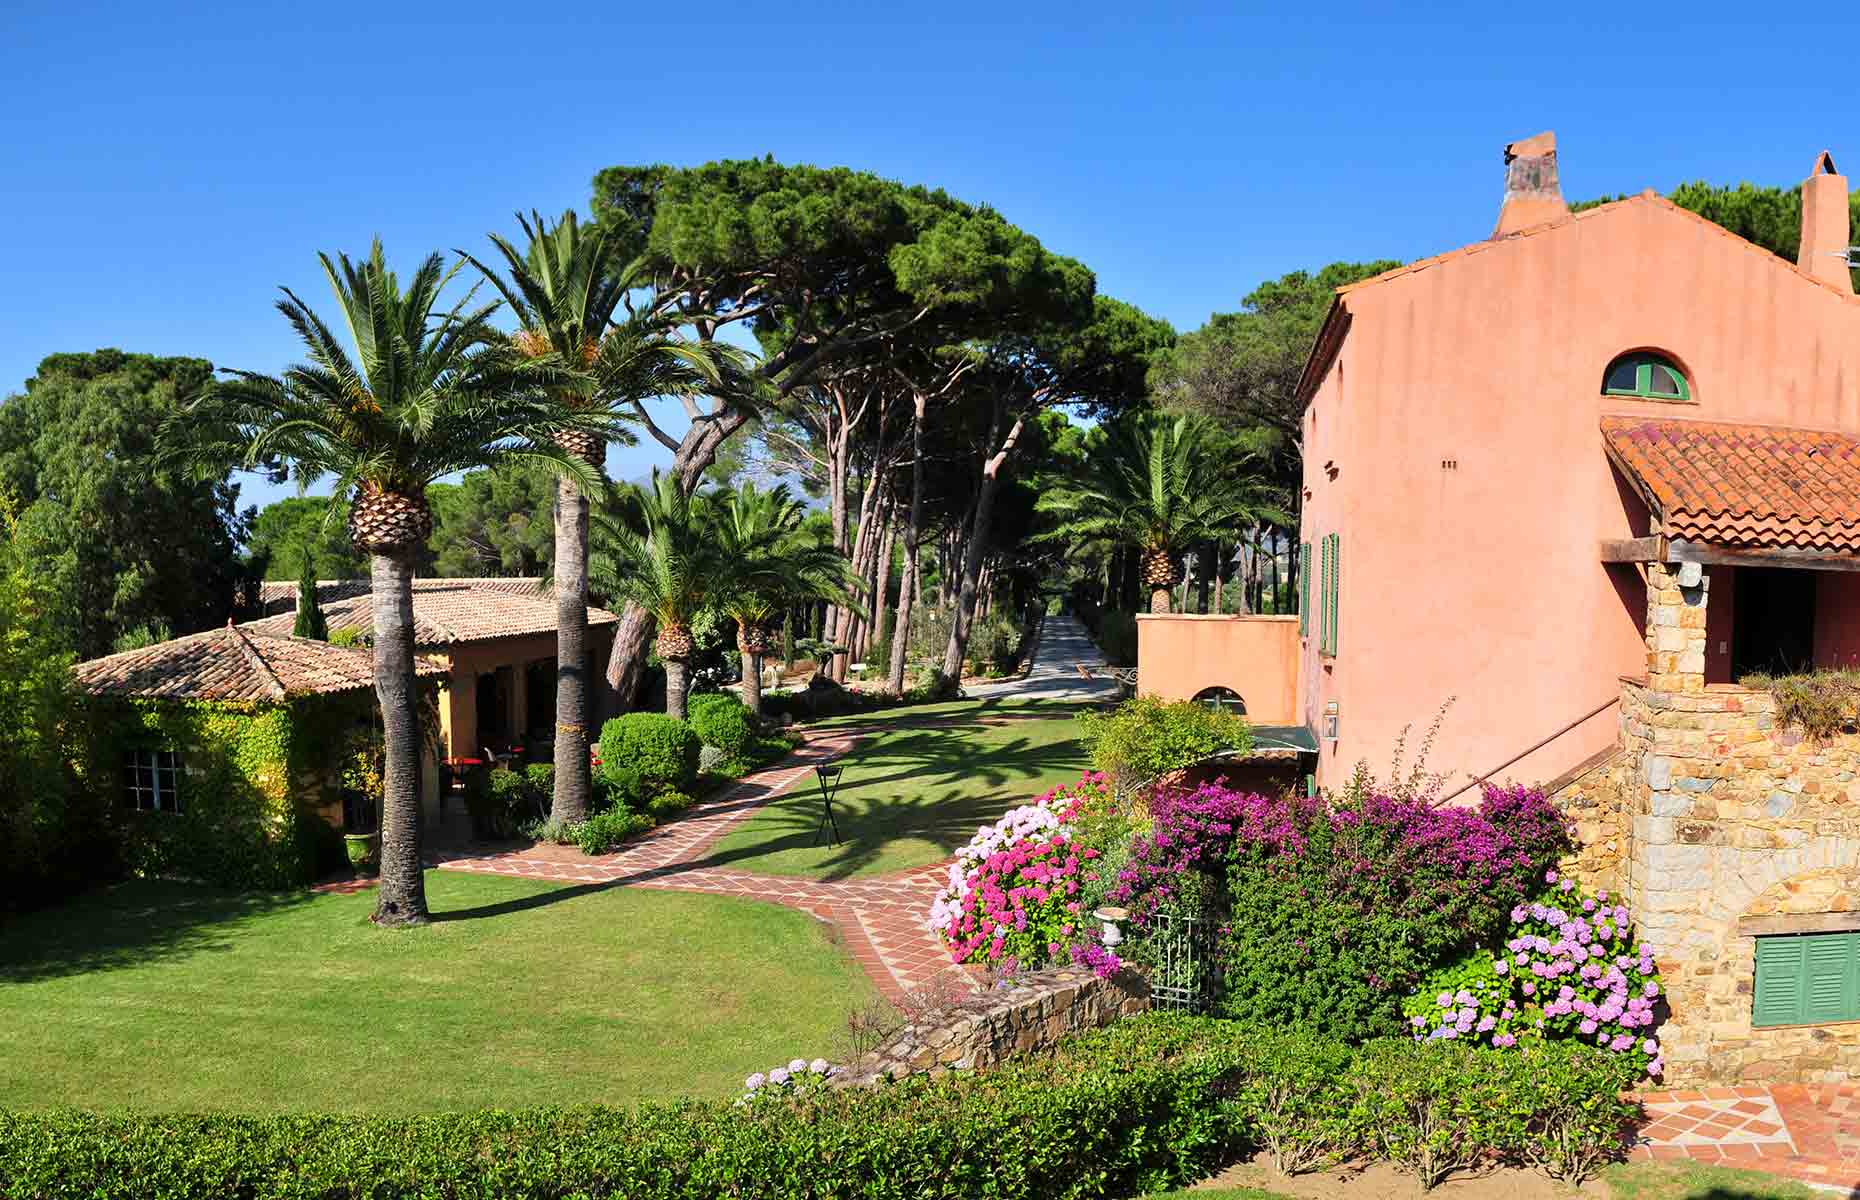 Jardins La Signora - Hôtel Calvi, Corse